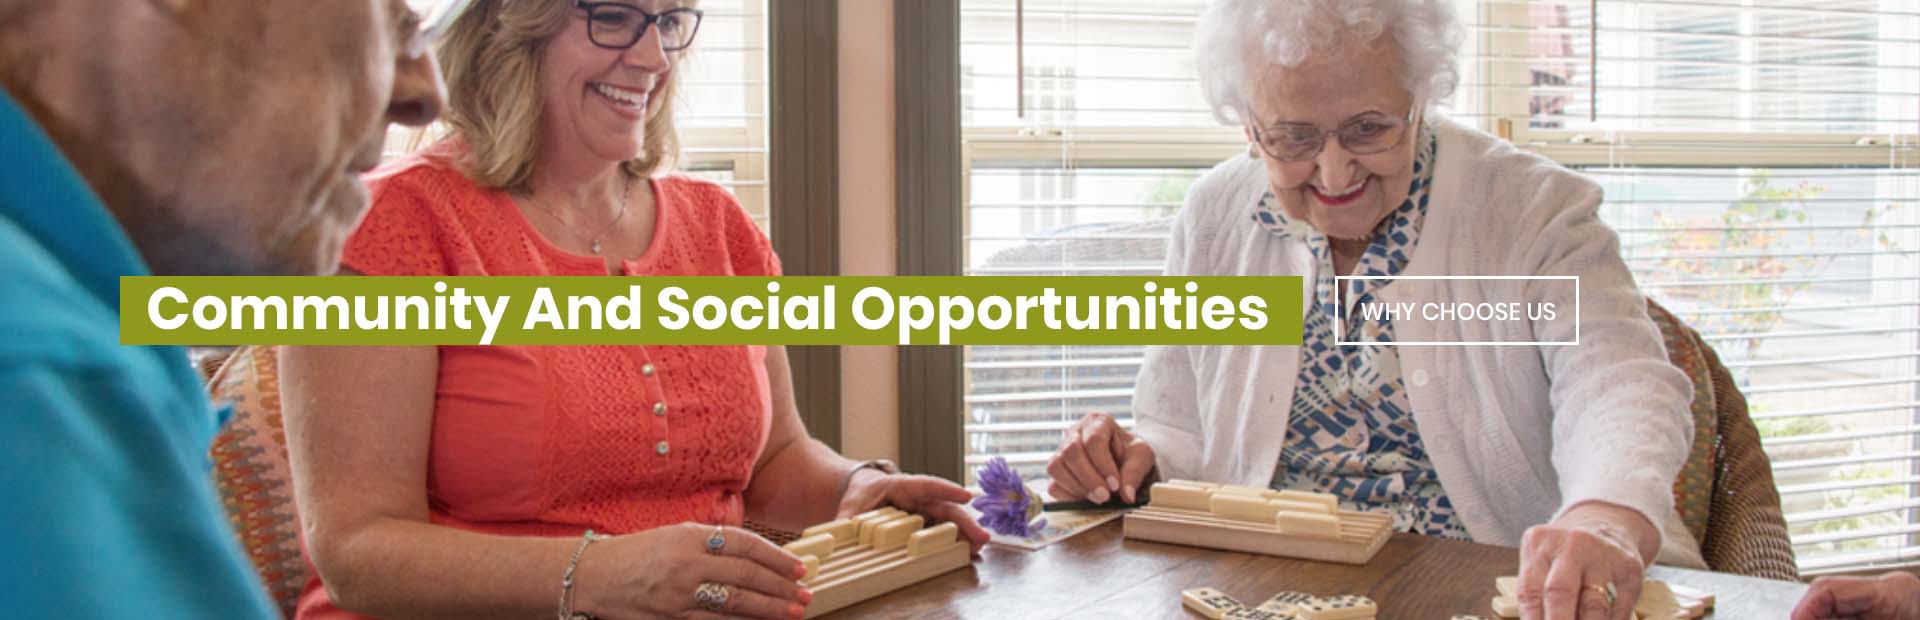 Community_Social_Opportunities